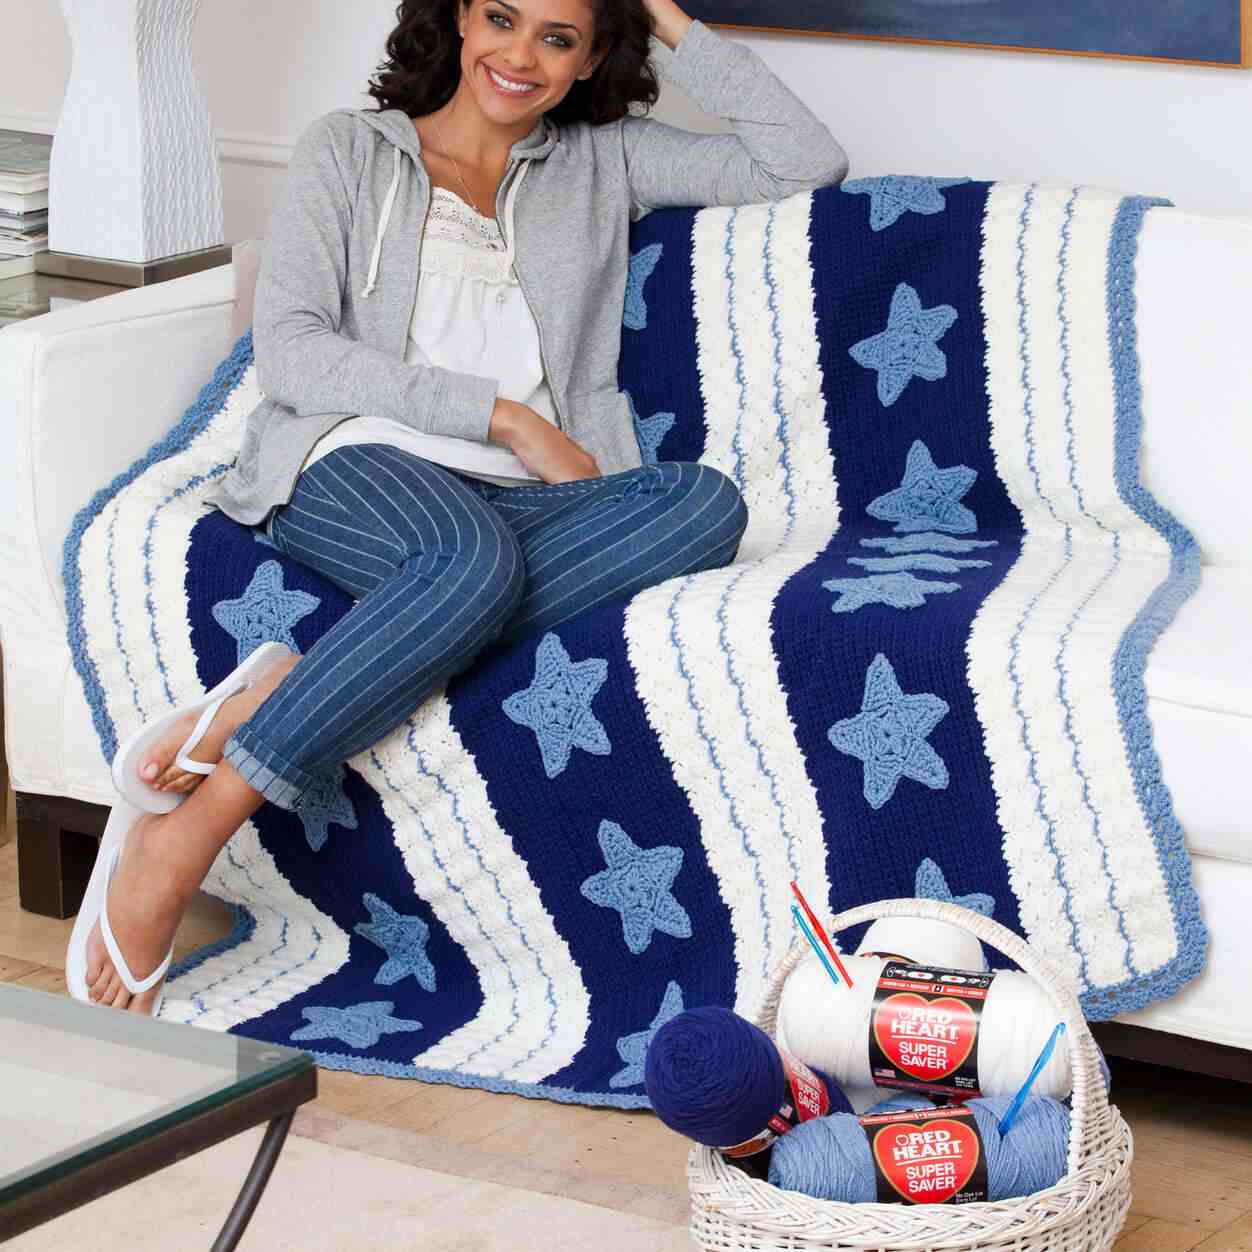 Spirit of America Blanket - Free Crochet Pattern